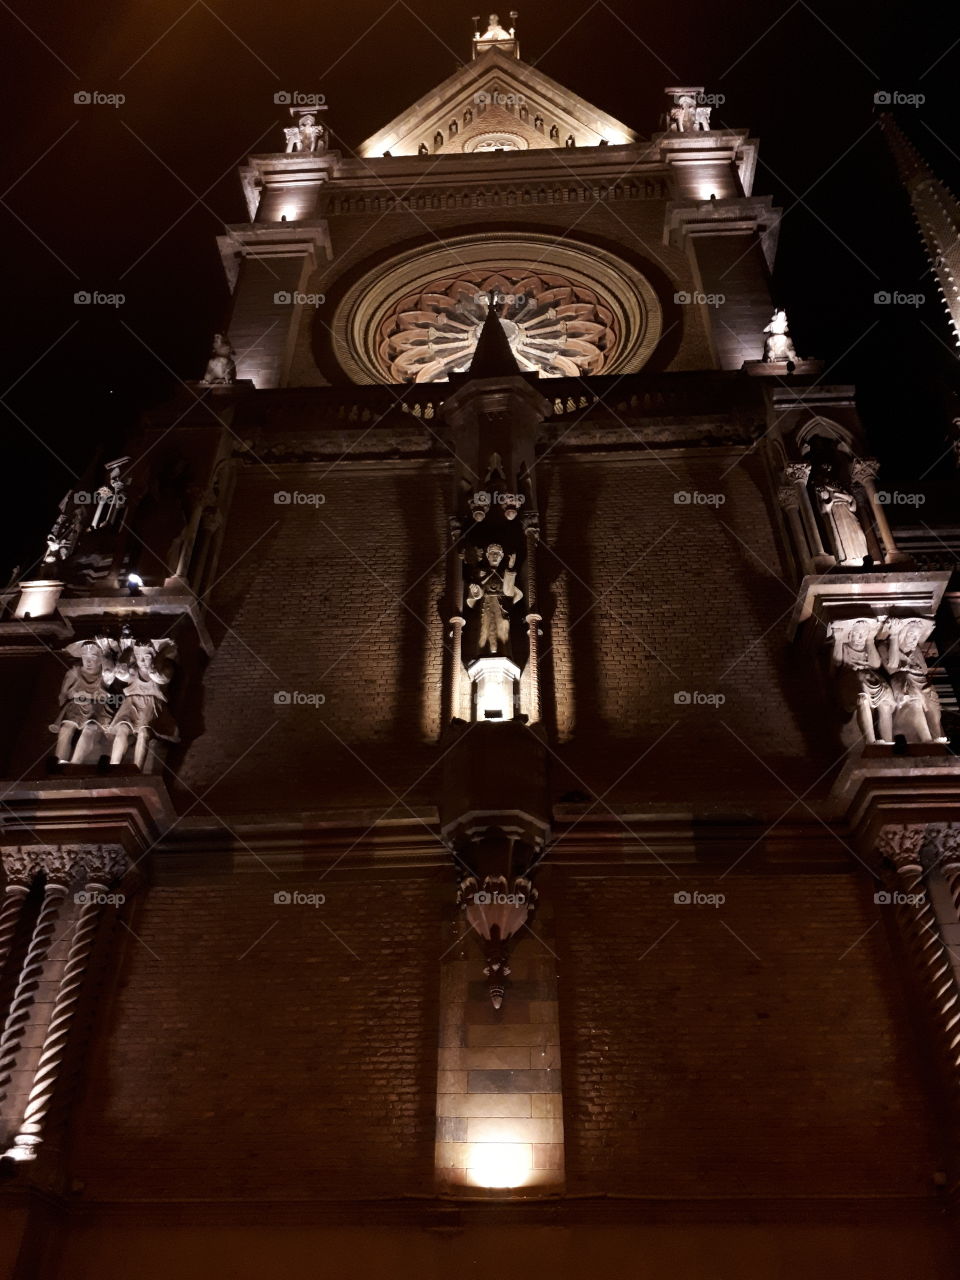 Catedral Capuchino,Cordoba,Argentina